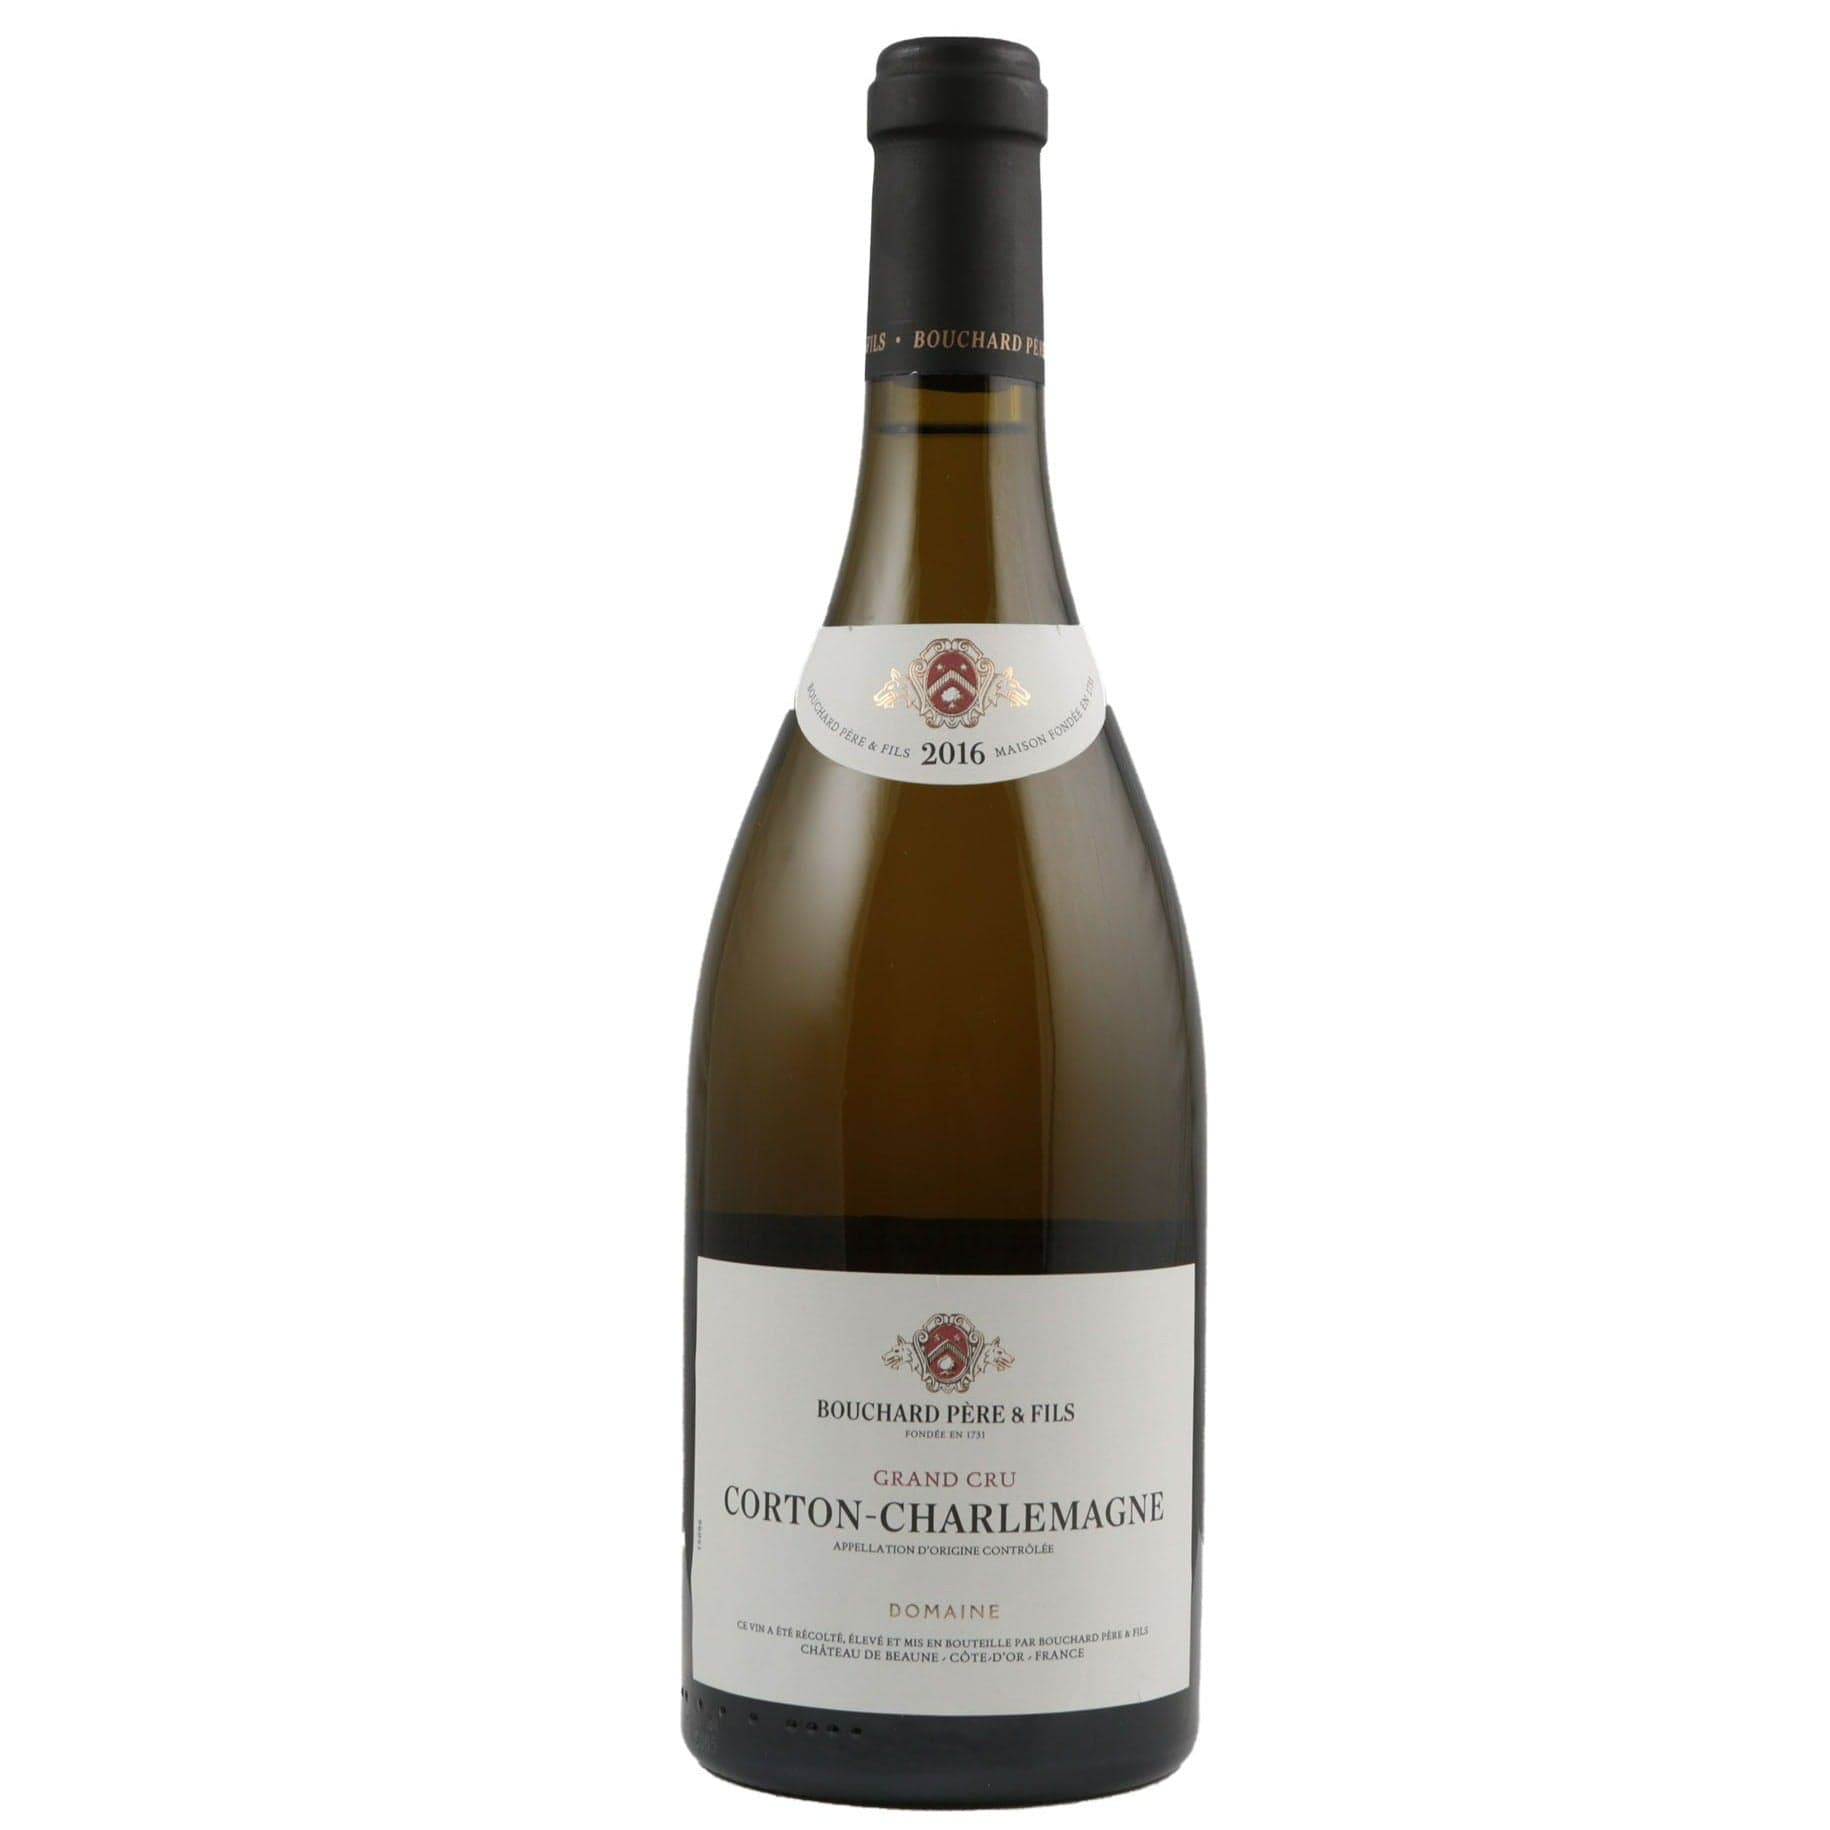 Single bottle of White wine Bouchard Pere et Fils, Grand Cru, Corton Charlemagne, 2016 100% Chardonnay